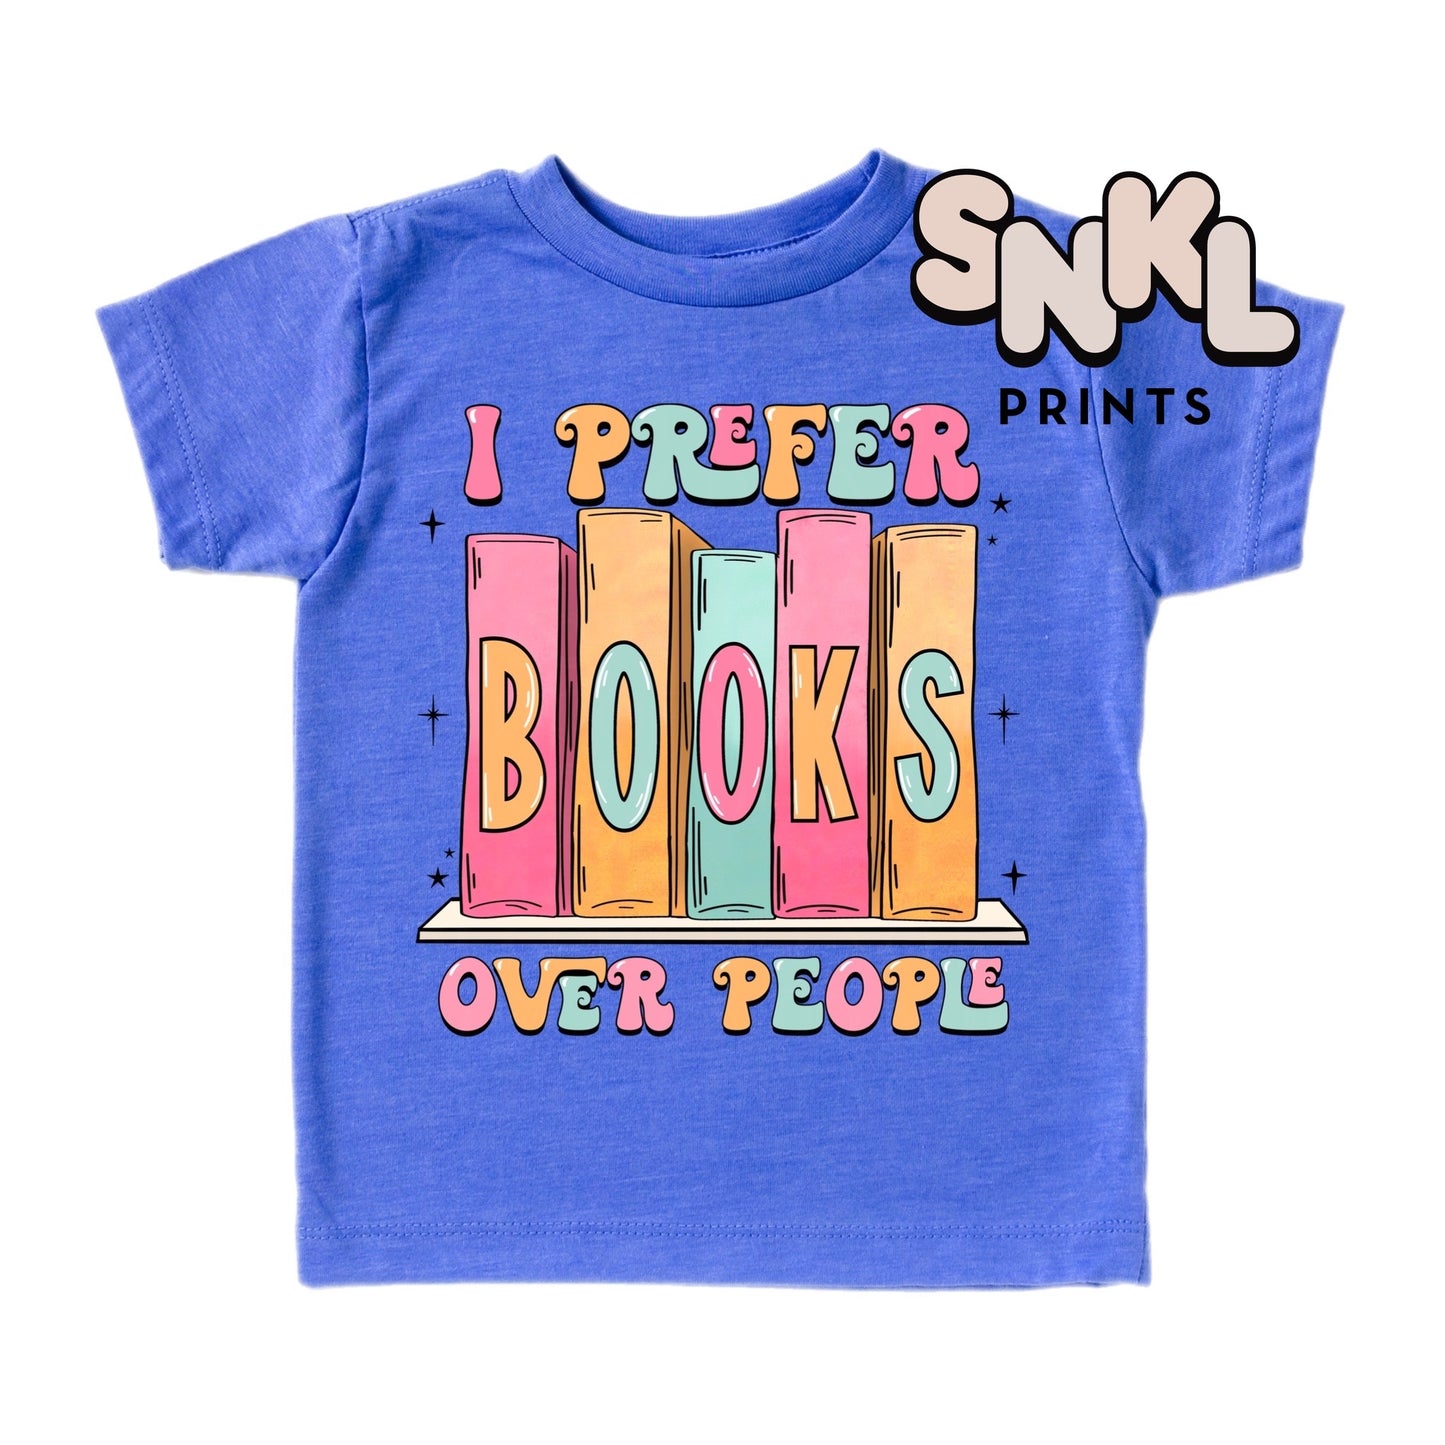 I Prefer Books Over People | Kids - SNKL Prints